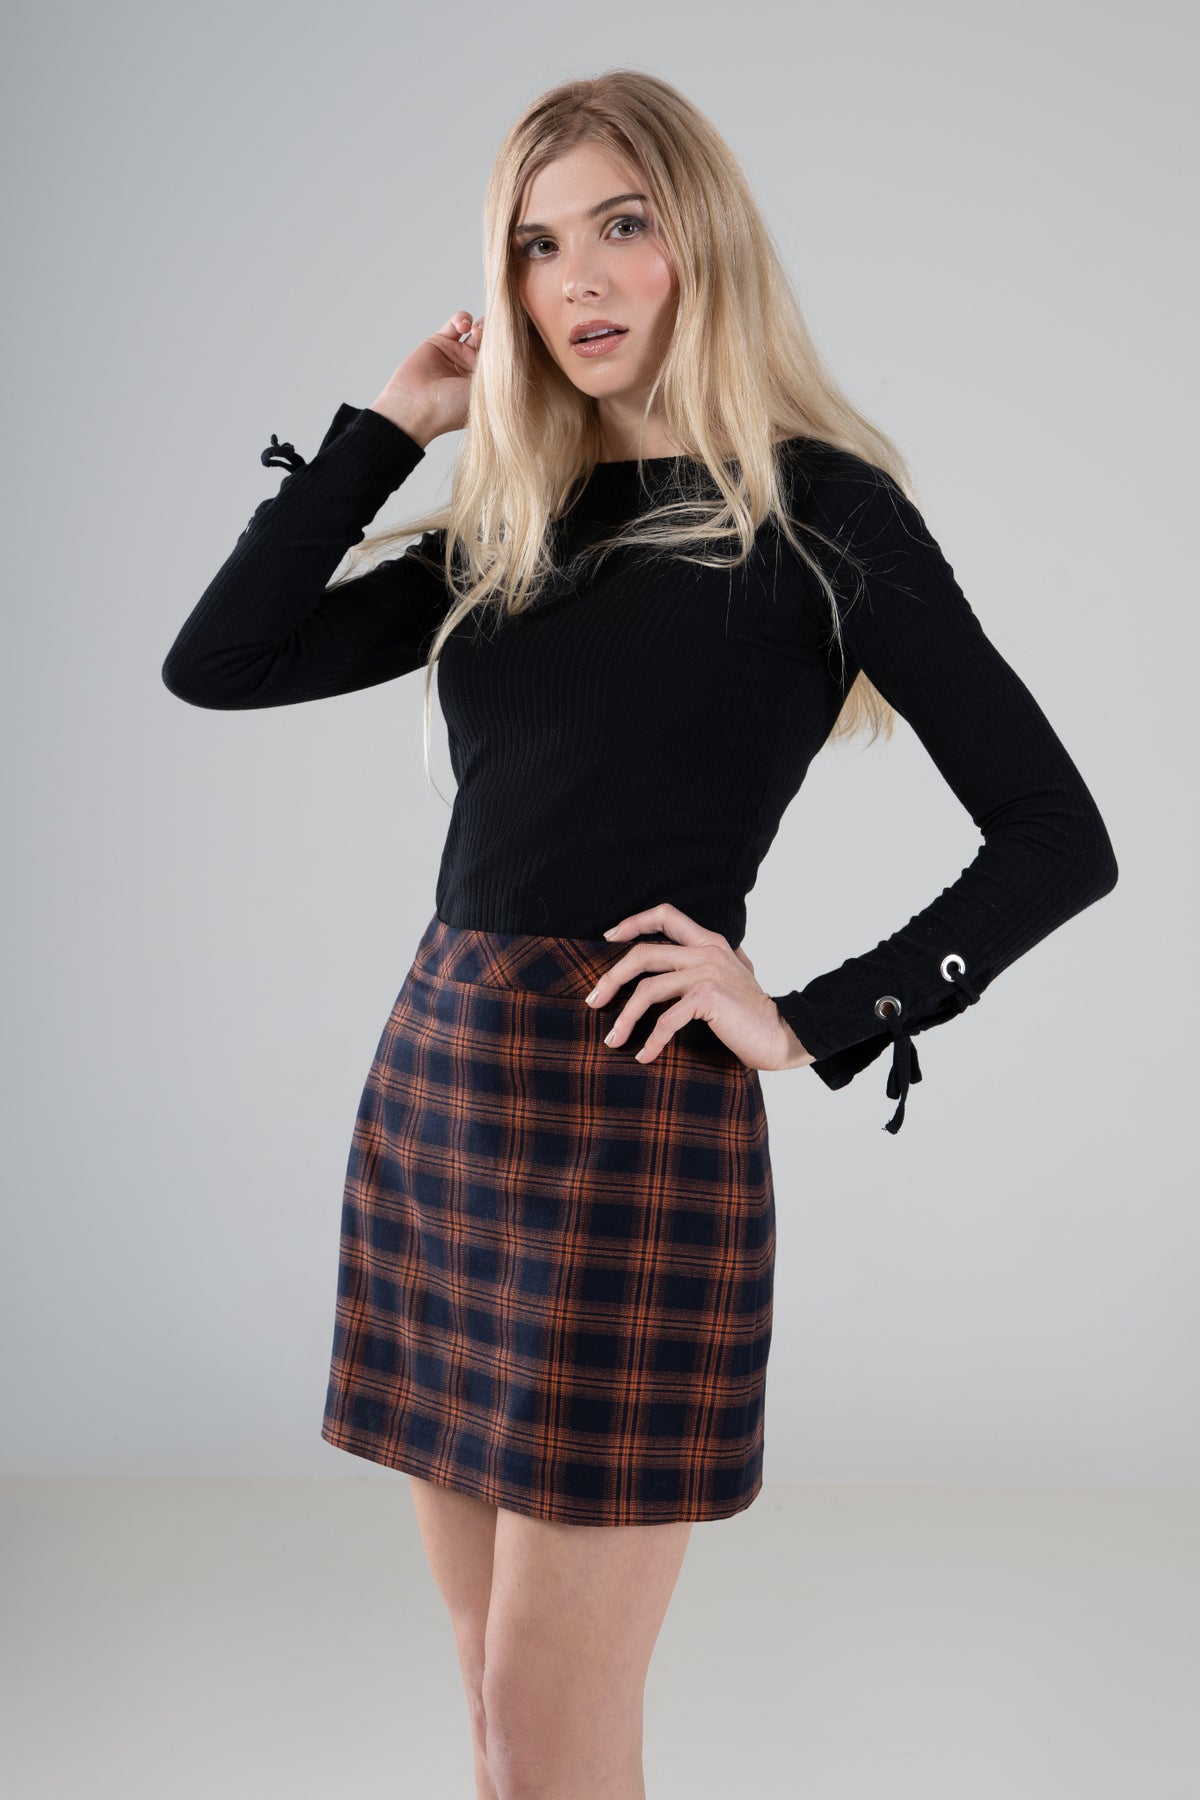 YEMOCILE Women Girls Plaid Skirts High Waist A-Line Belt Lace Up